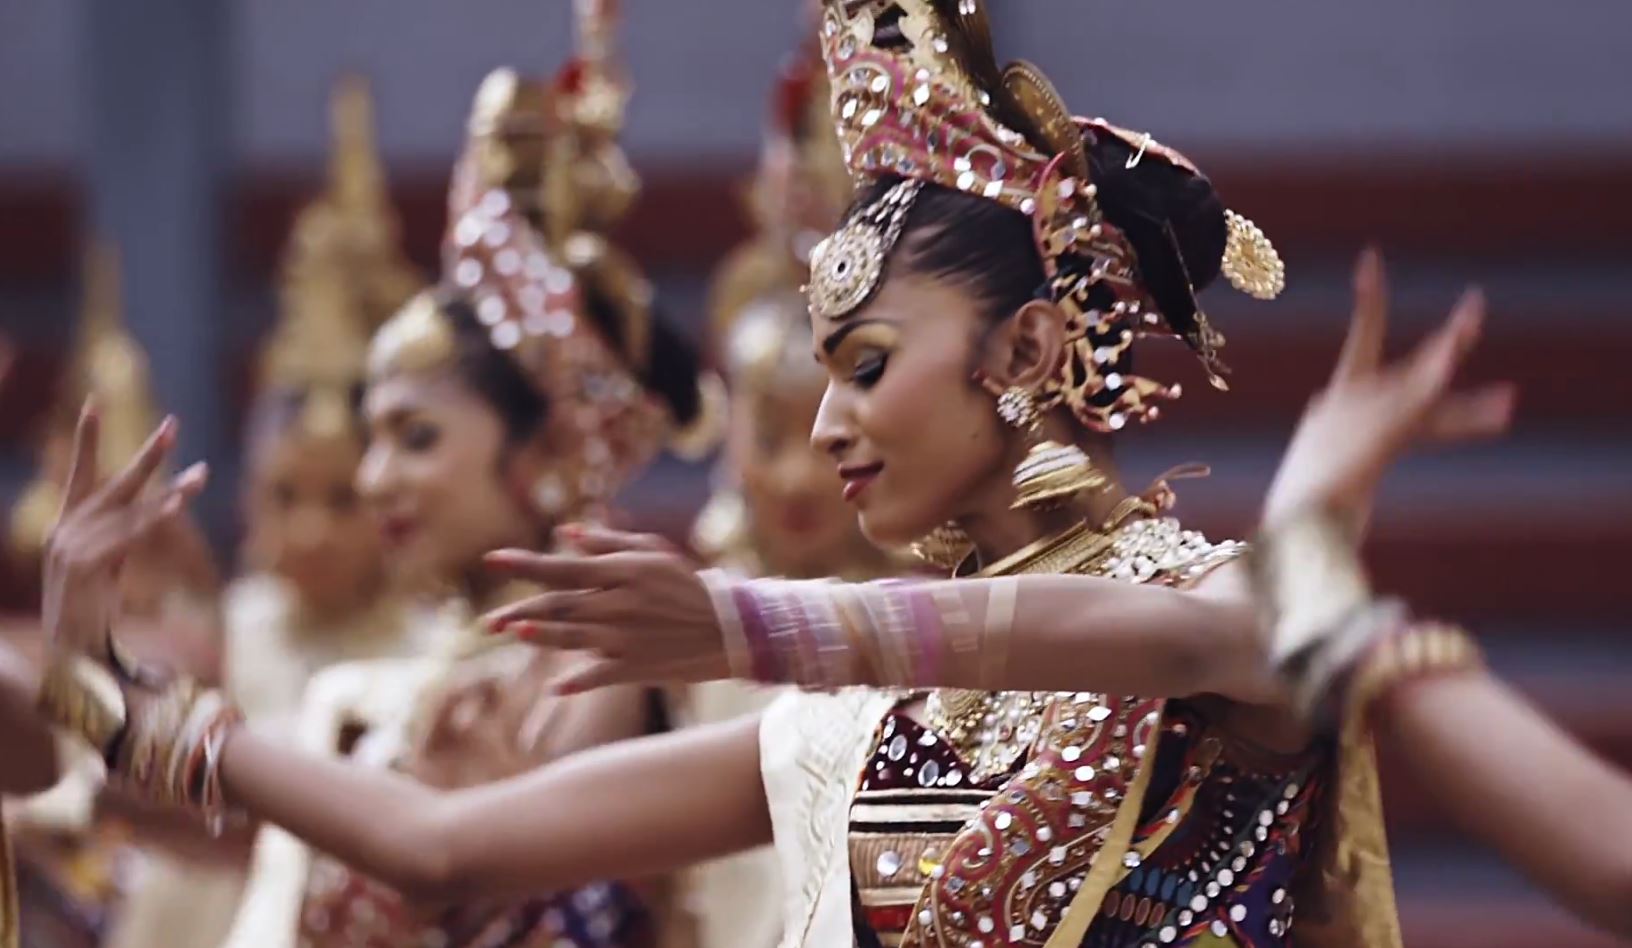 Catch a glimpse of how SriLankan Airlines portrays the Sri Lankan culture